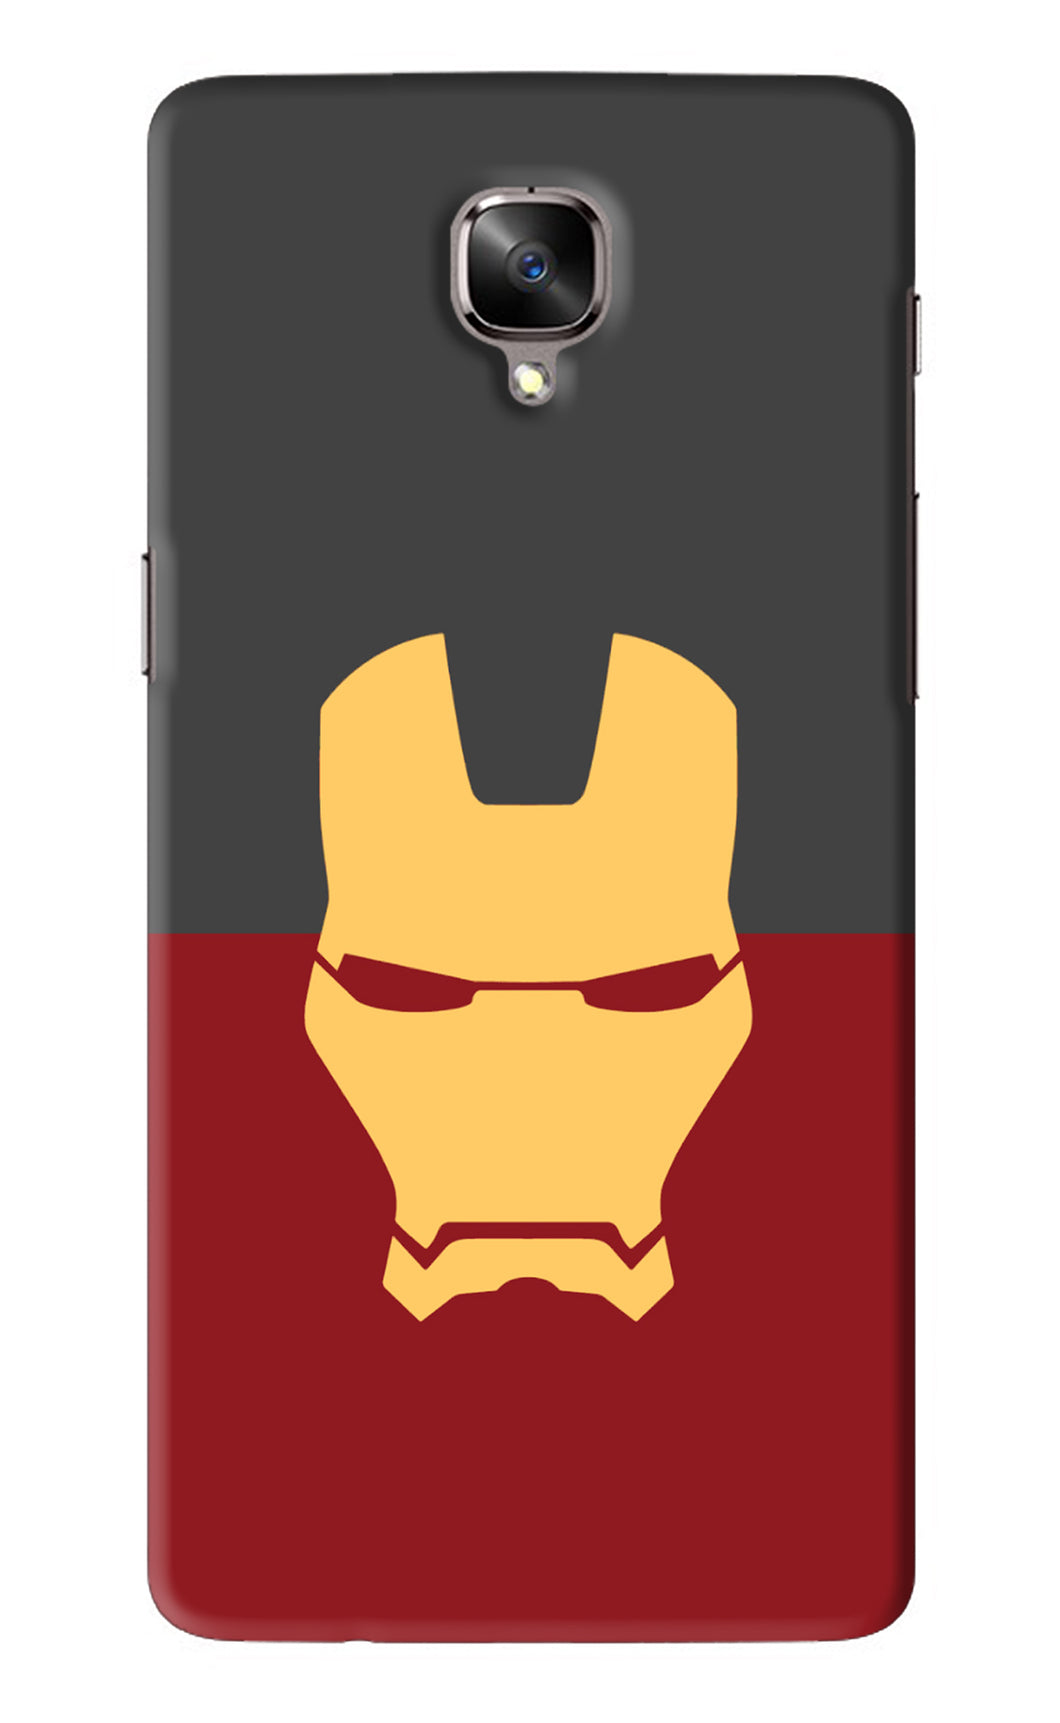 Ironman OnePlus 3T Back Skin Wrap